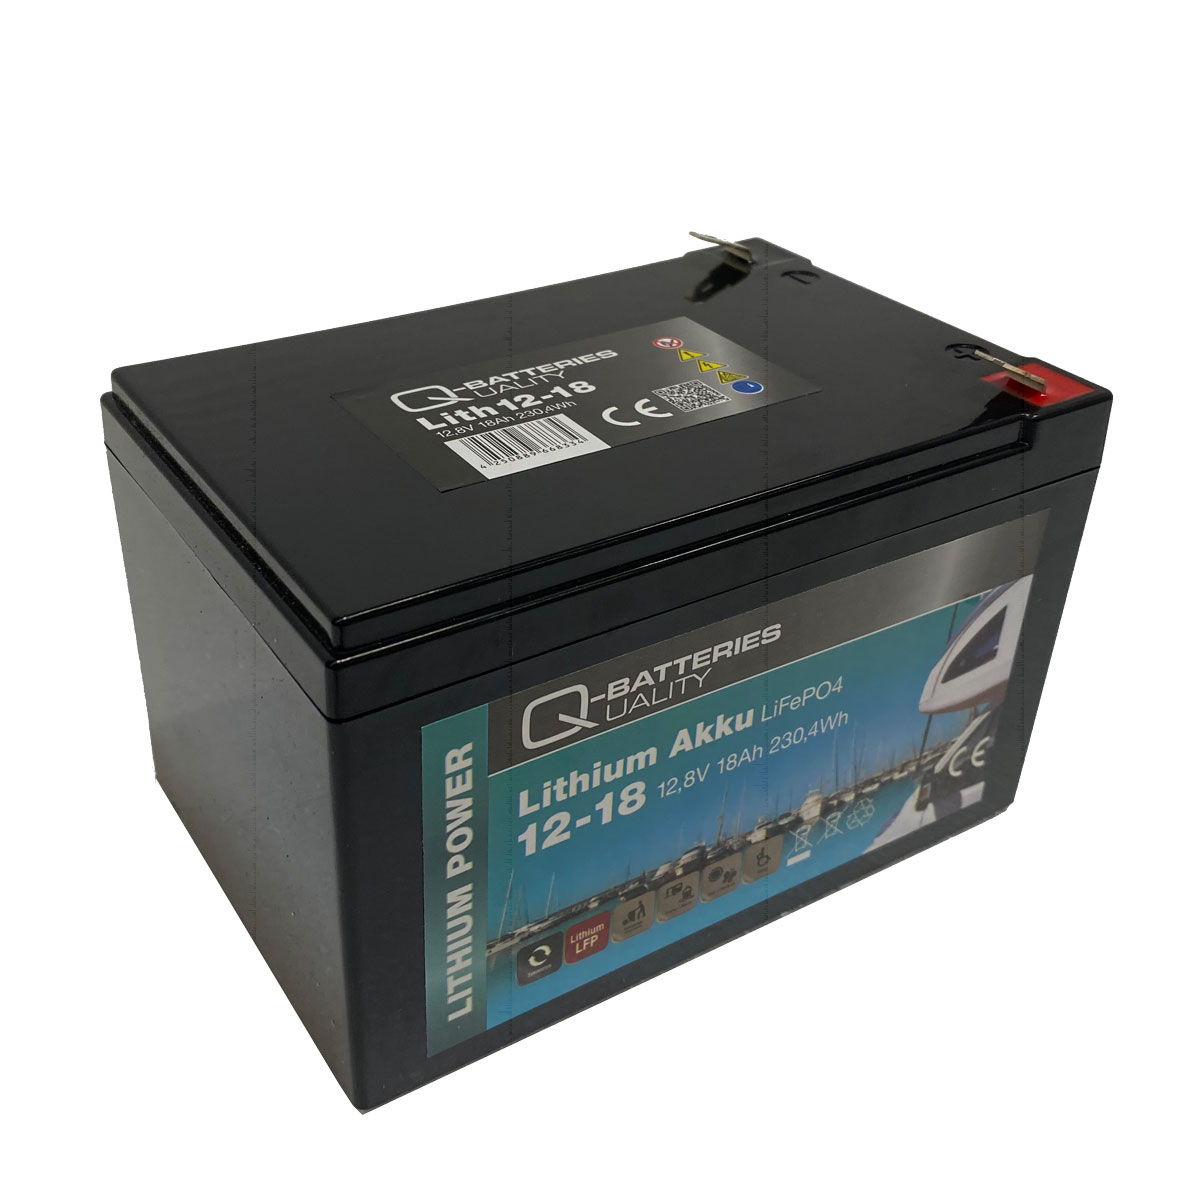 Q-Batteries Lithium Akku 12-18 12,8V 18Ah 230,4Wh LiFePO4 Batterie